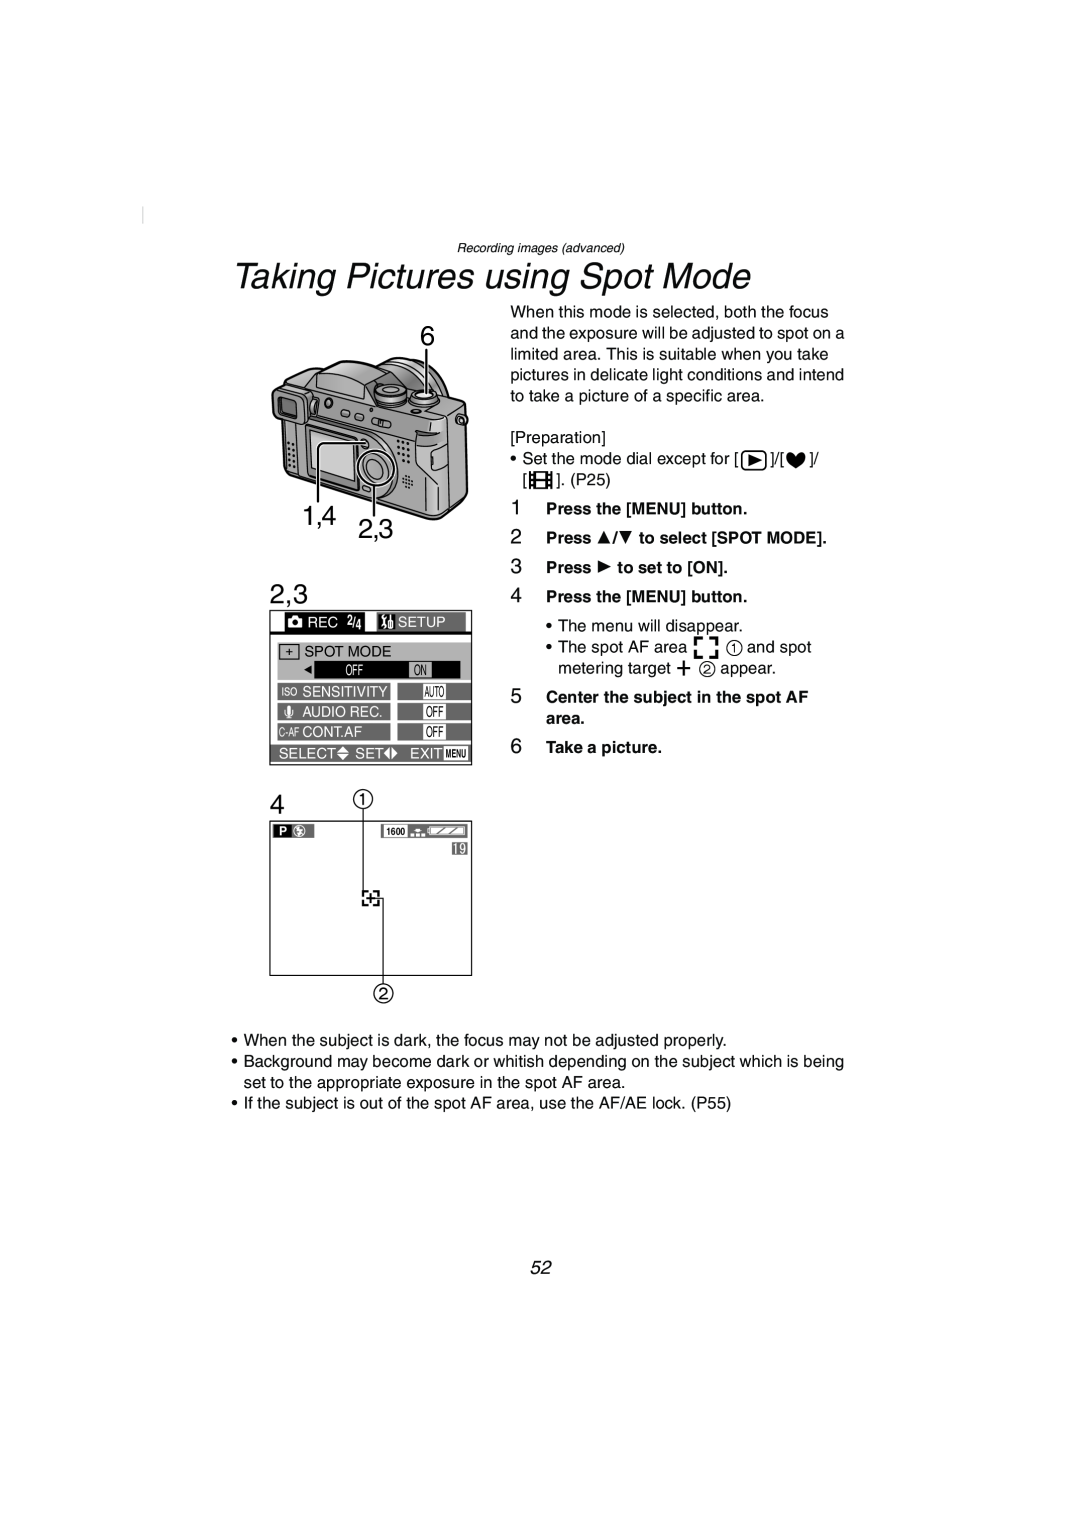 Panasonic DMC-FZ2PP Taking Pictures using Spot Mode, Press the MENU button 2 Press 3/4 to select SPOT MODE 